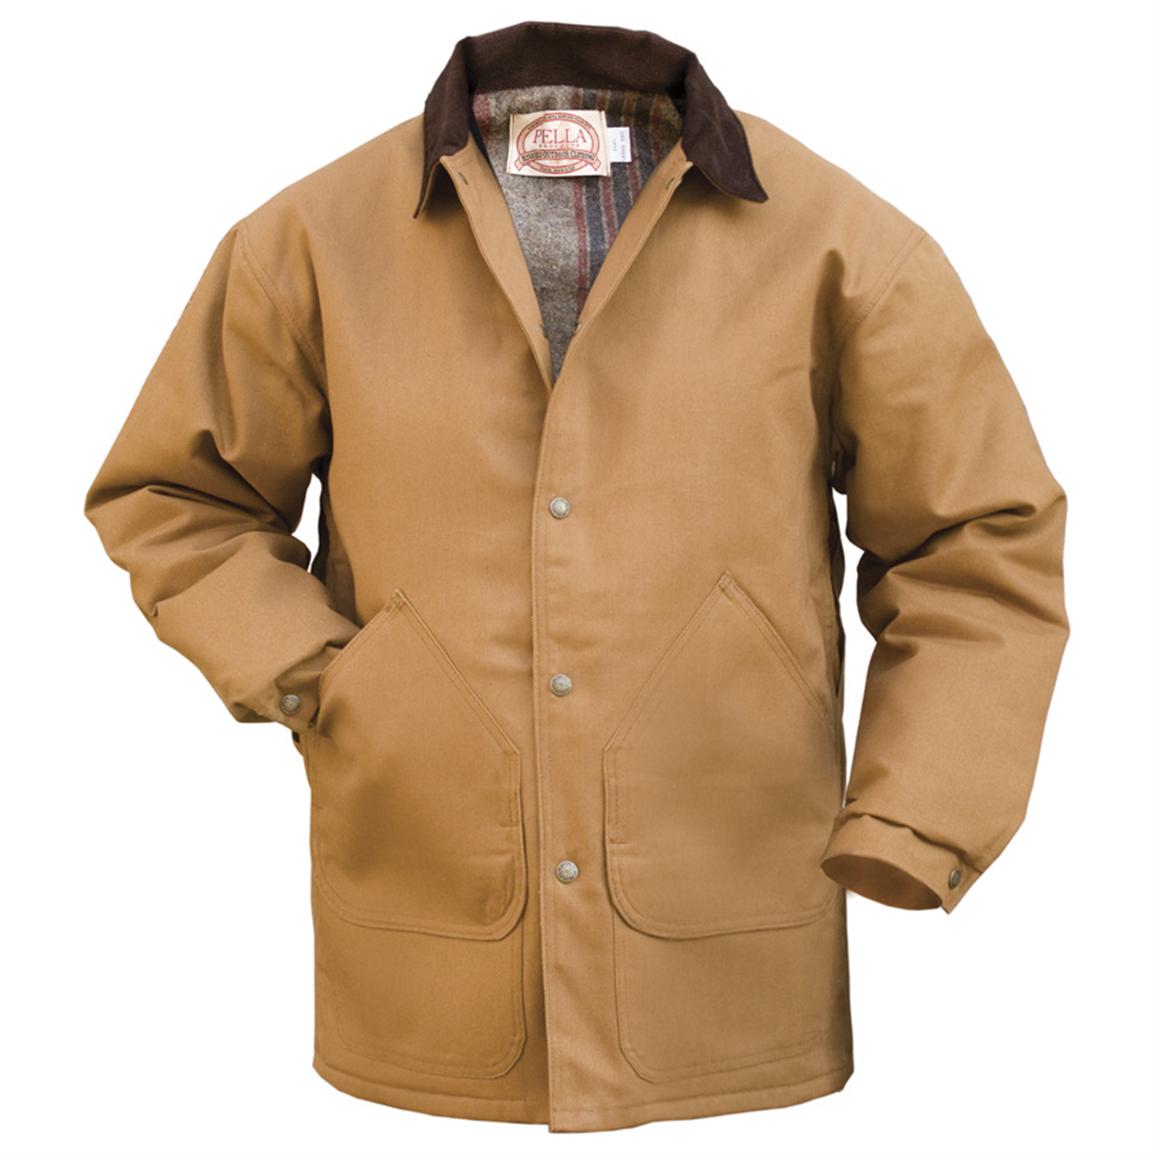  Men s  Pella  Field Coat  Tall Brown 166588 Insulated 